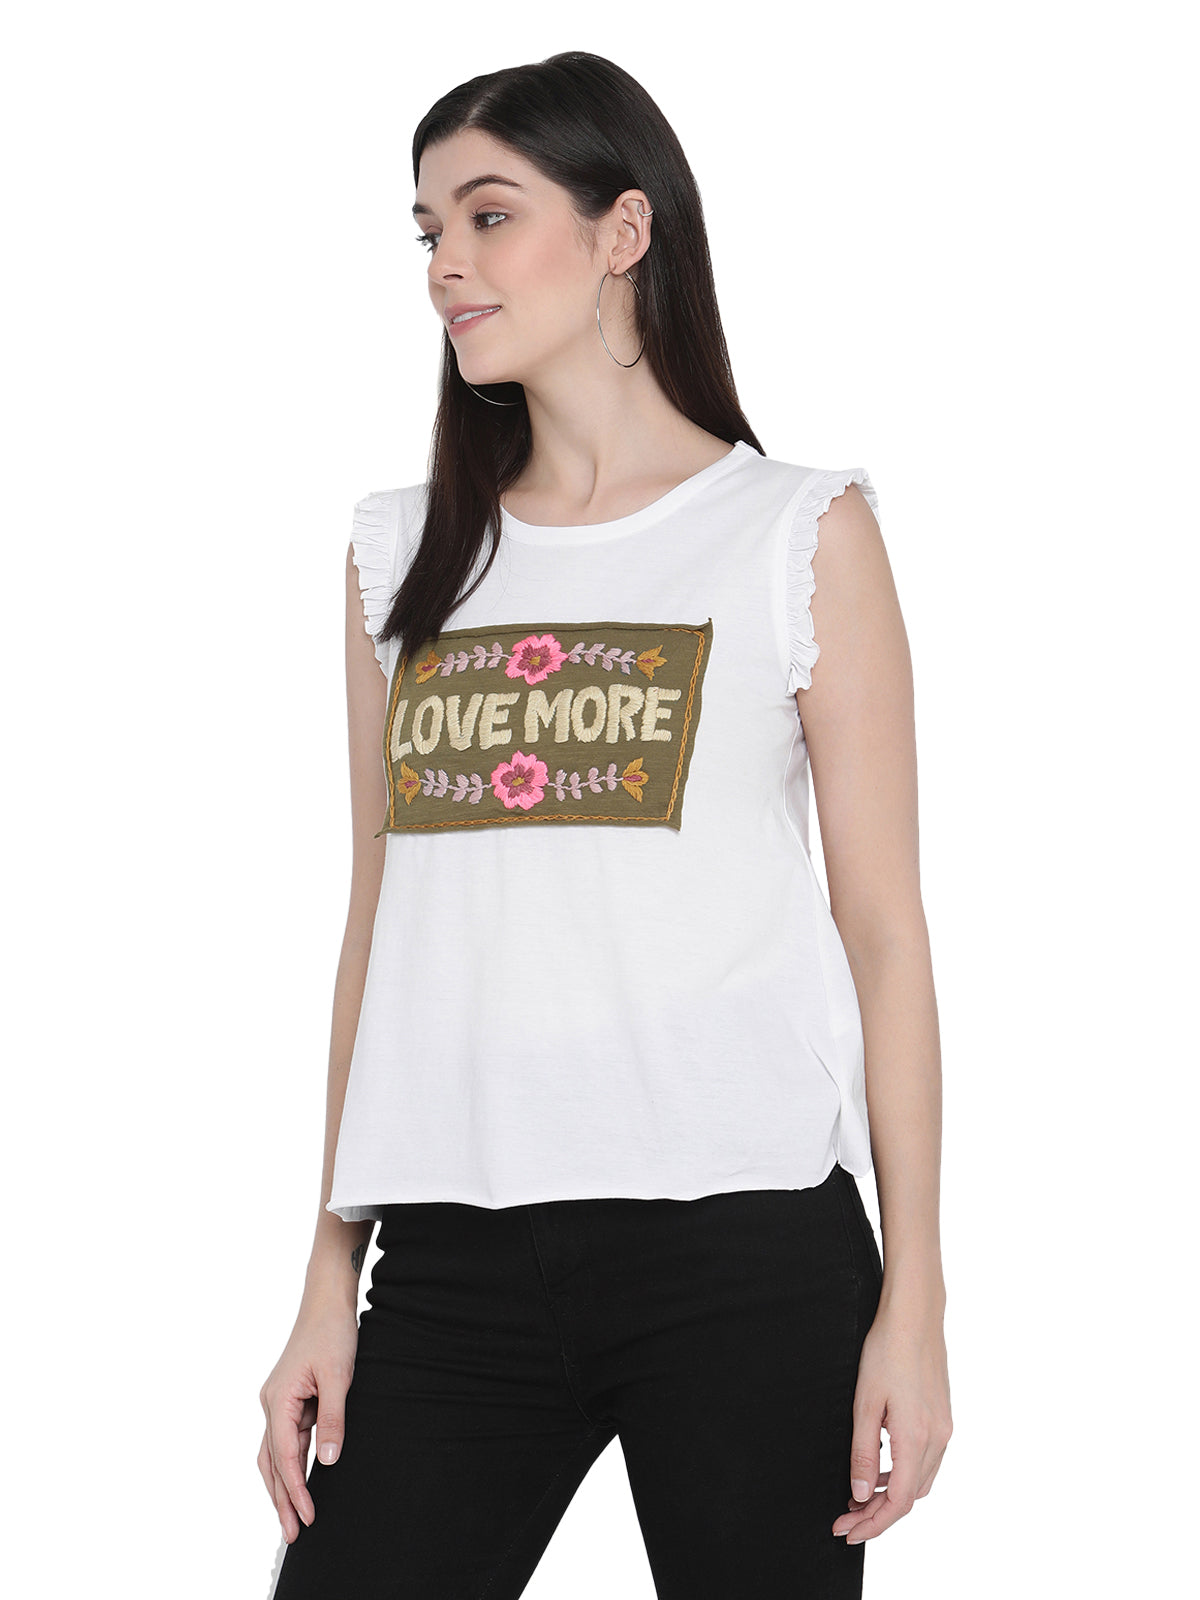 PORSORTE Women's Cotton Jersey Love You Graphic Top